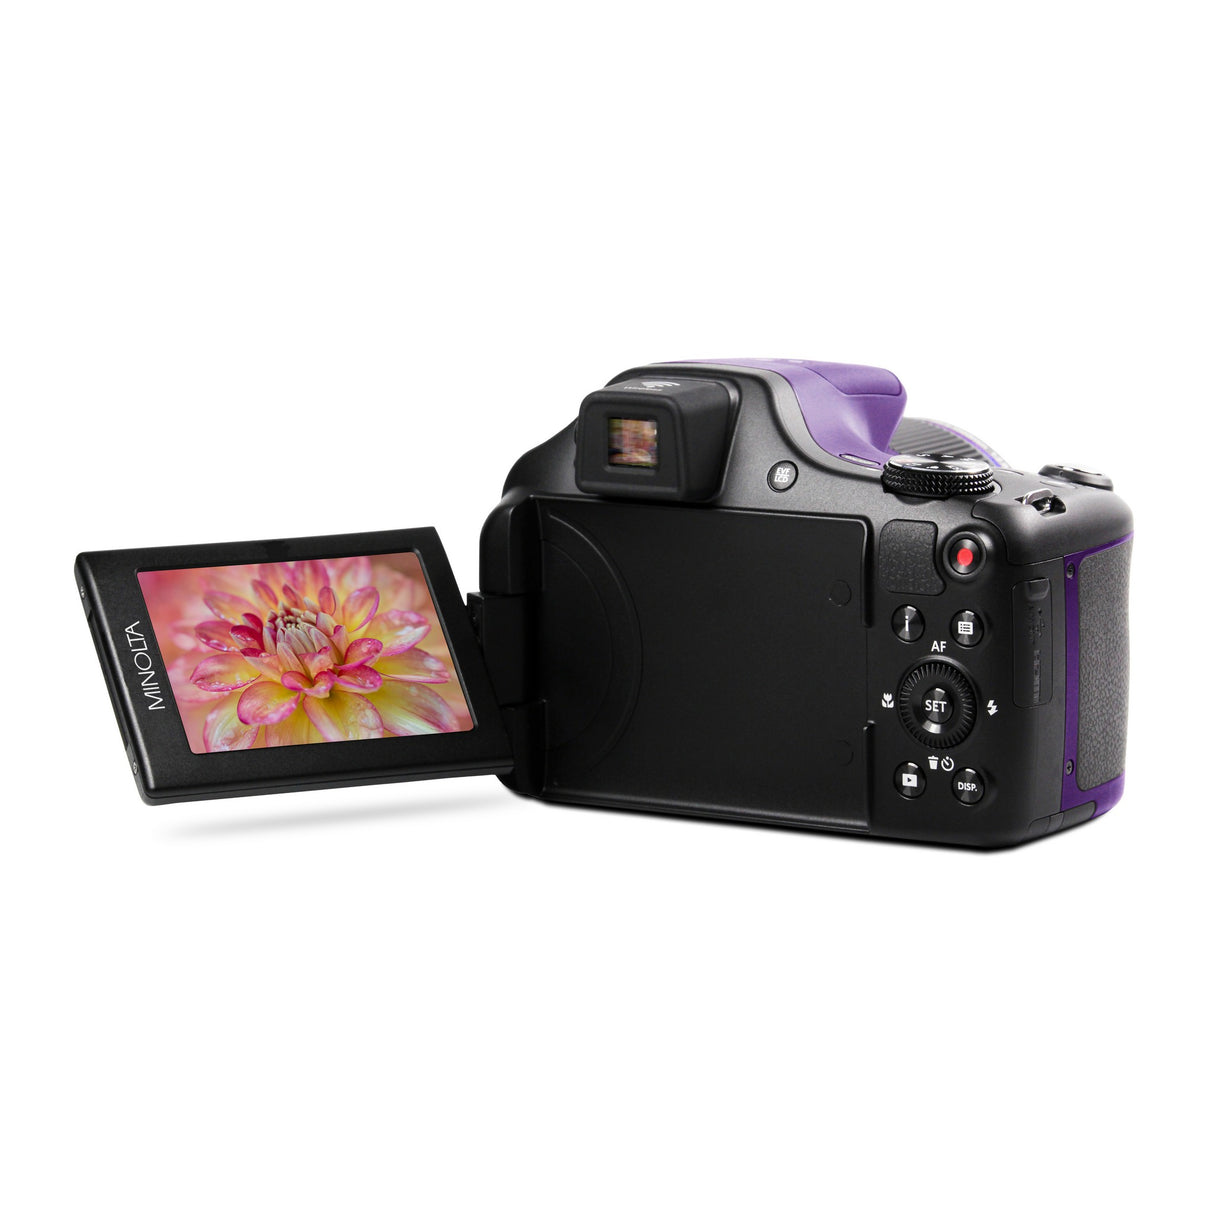 Minolta MN67Z 20 MP 1080p HD Bridge Digital Camera with 67x Optical Zoom, Purple